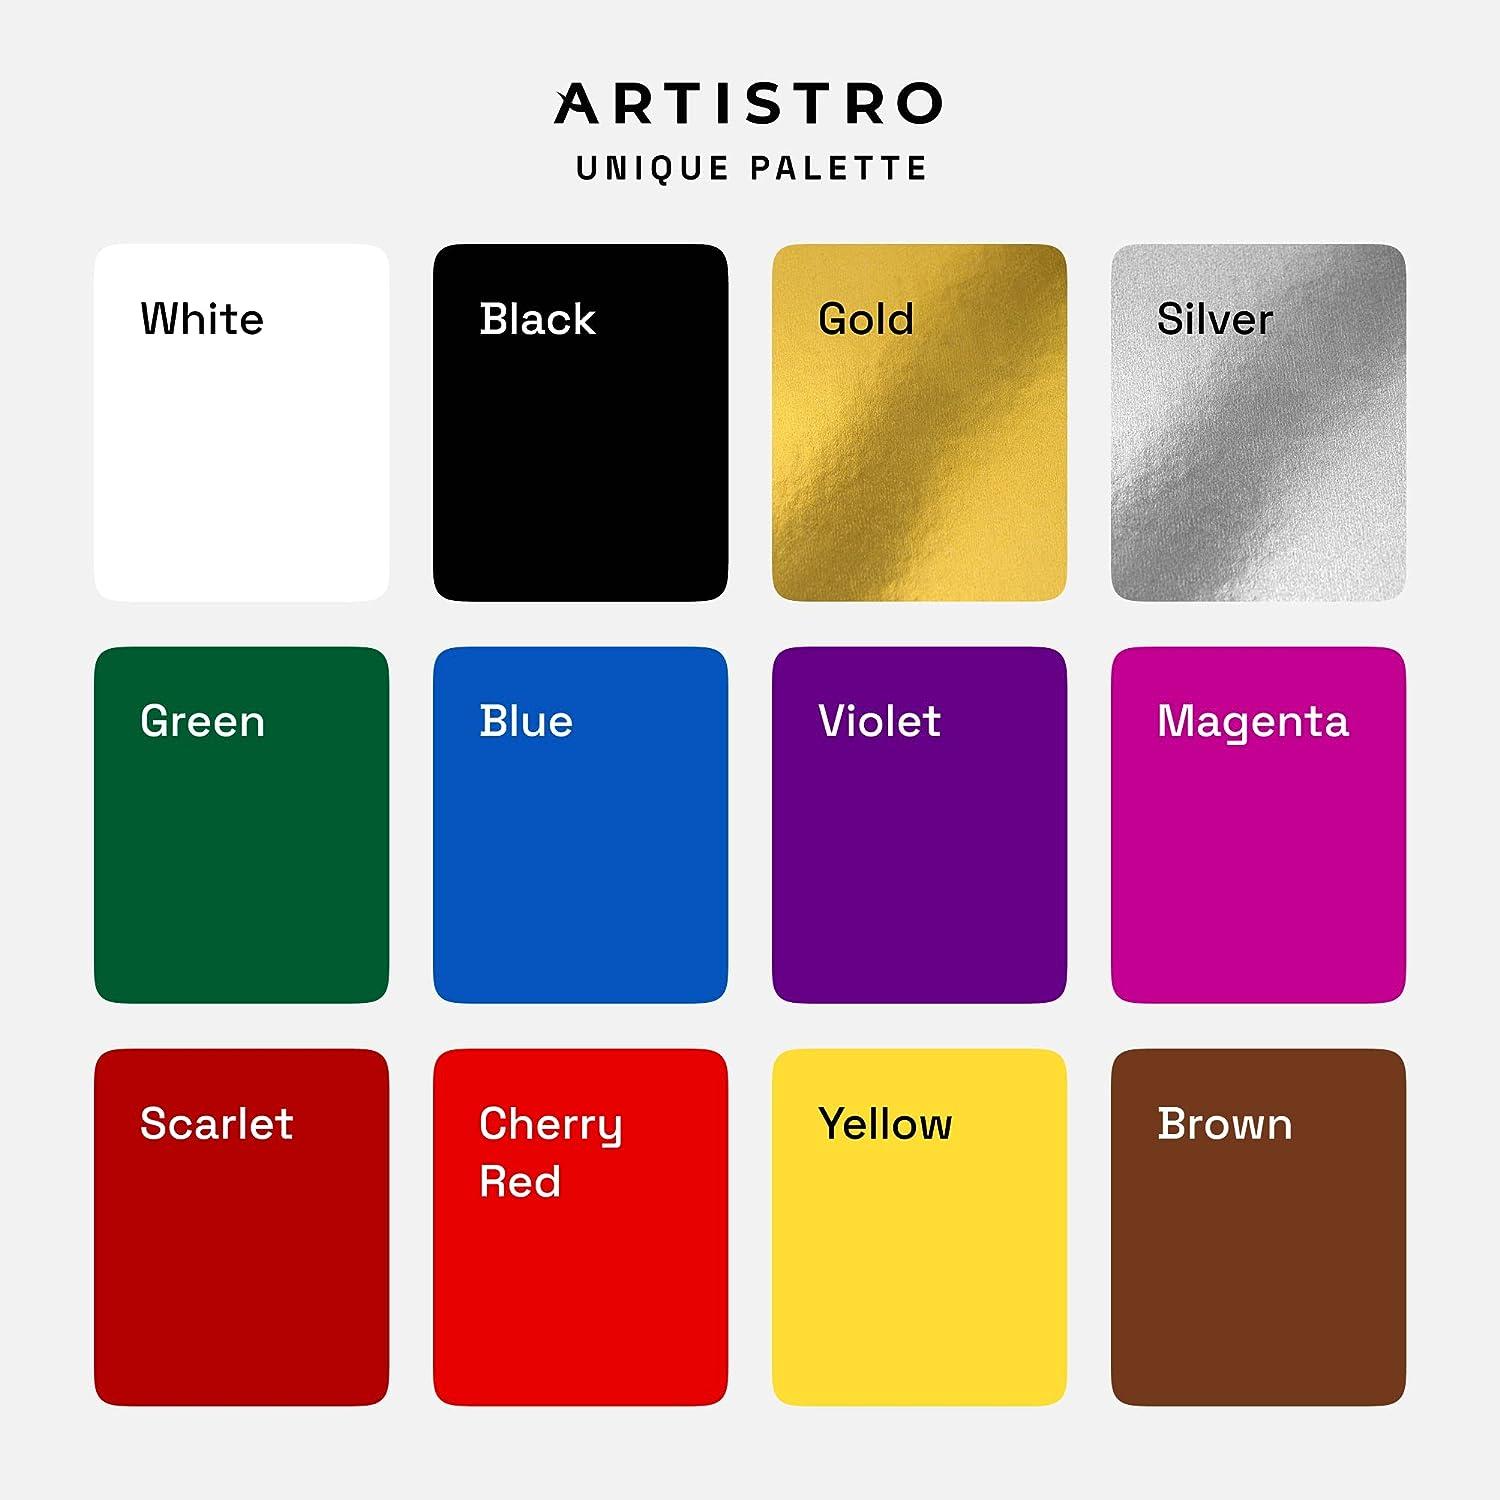 Artistro 12 Metallic Acrylic Paint Pens Extra-fine Tip for Rock